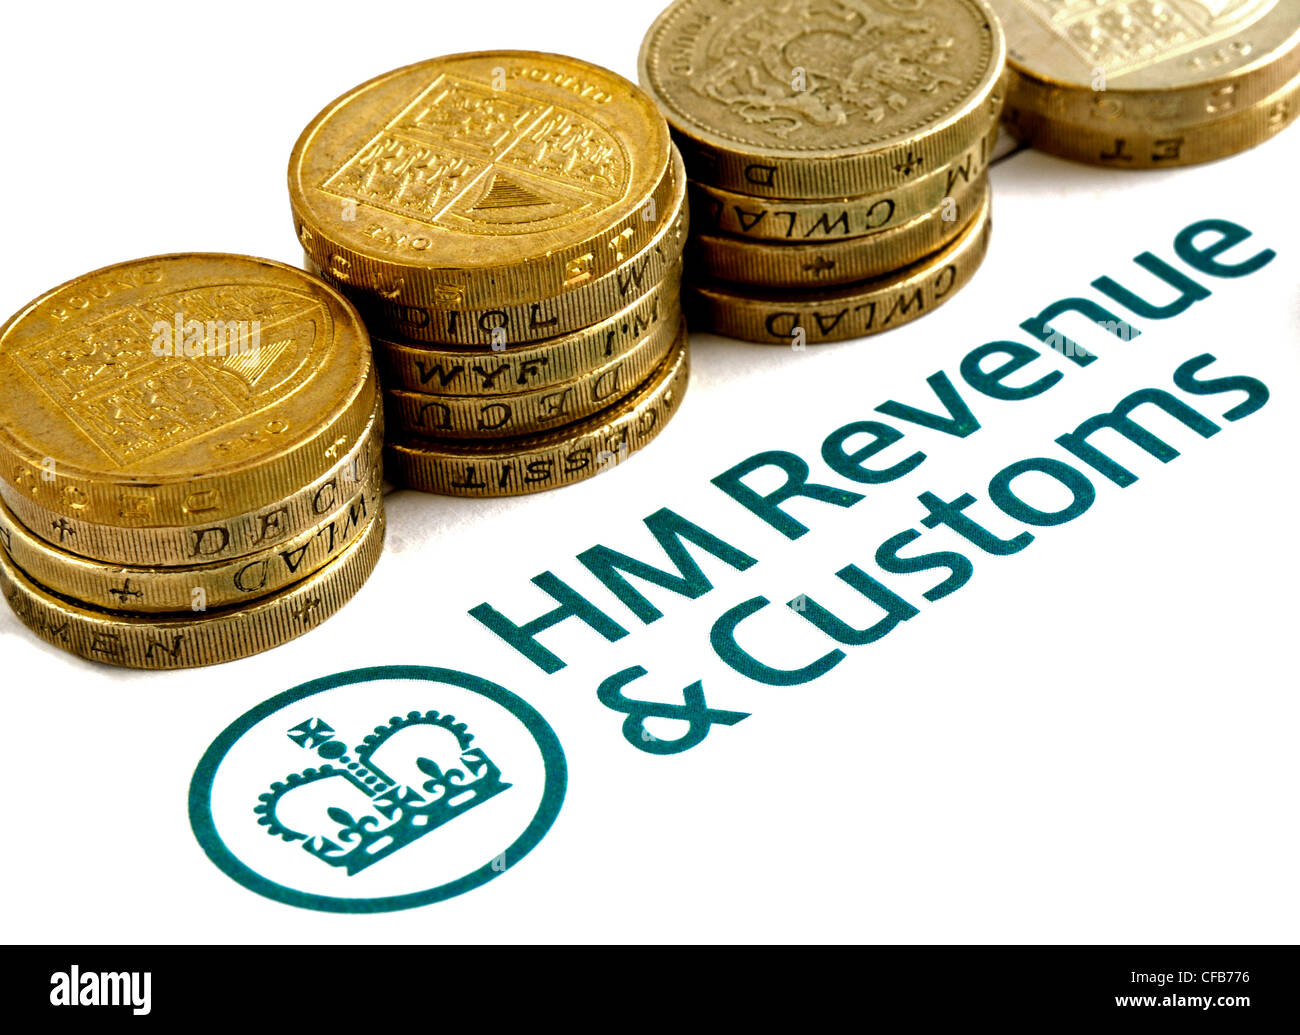 hm-revenue-customs-tax-return-stock-photo-alamy